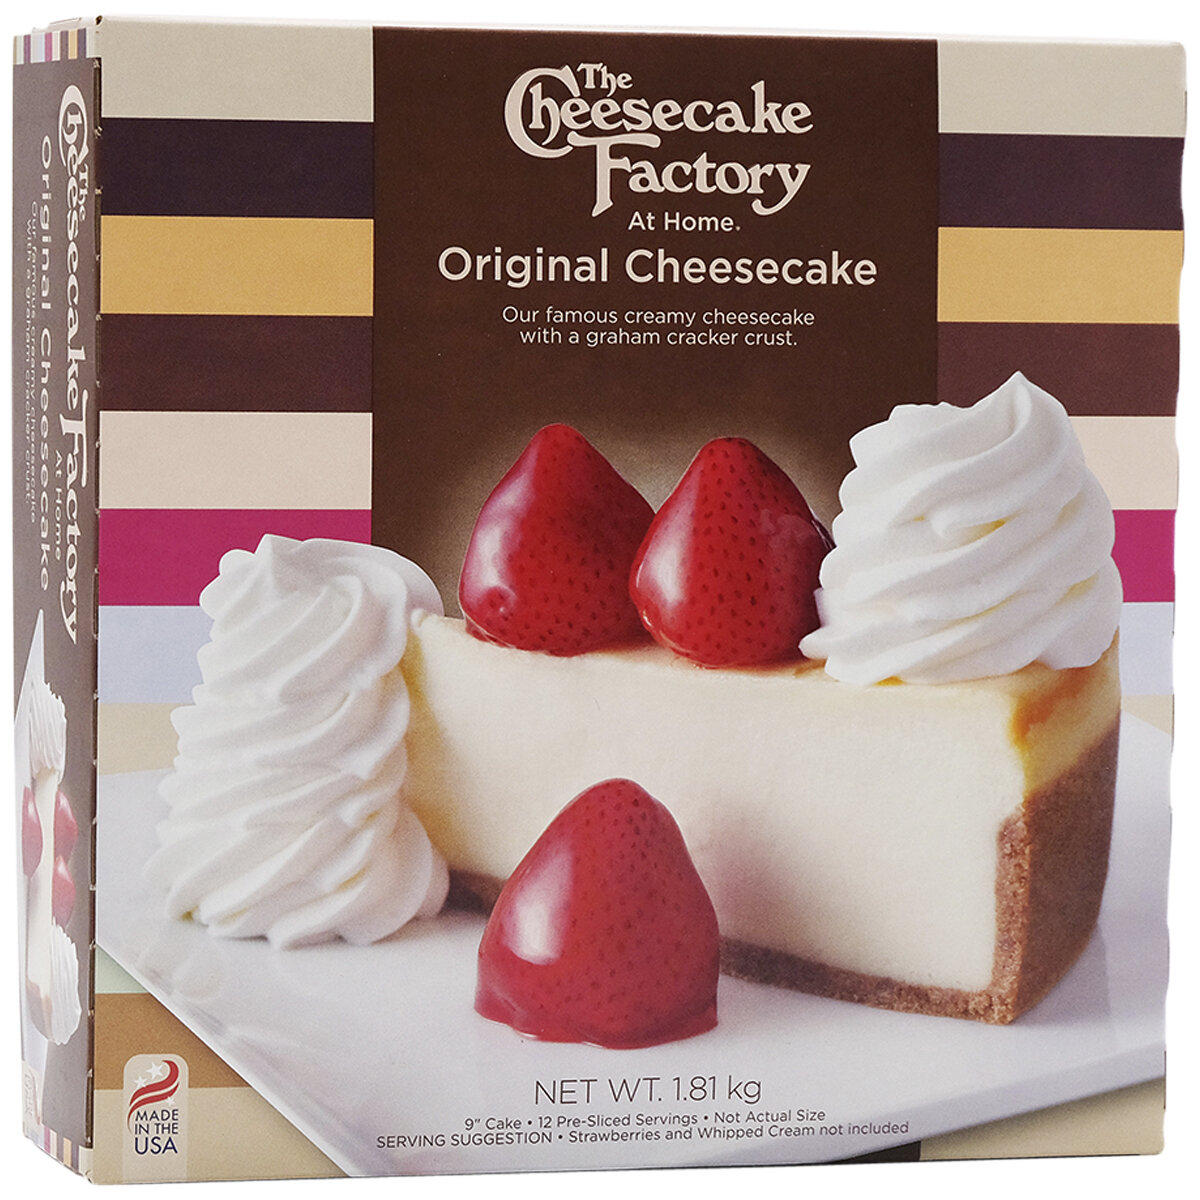 The Cheesecake Factory Original Cheesecake 1.81kg